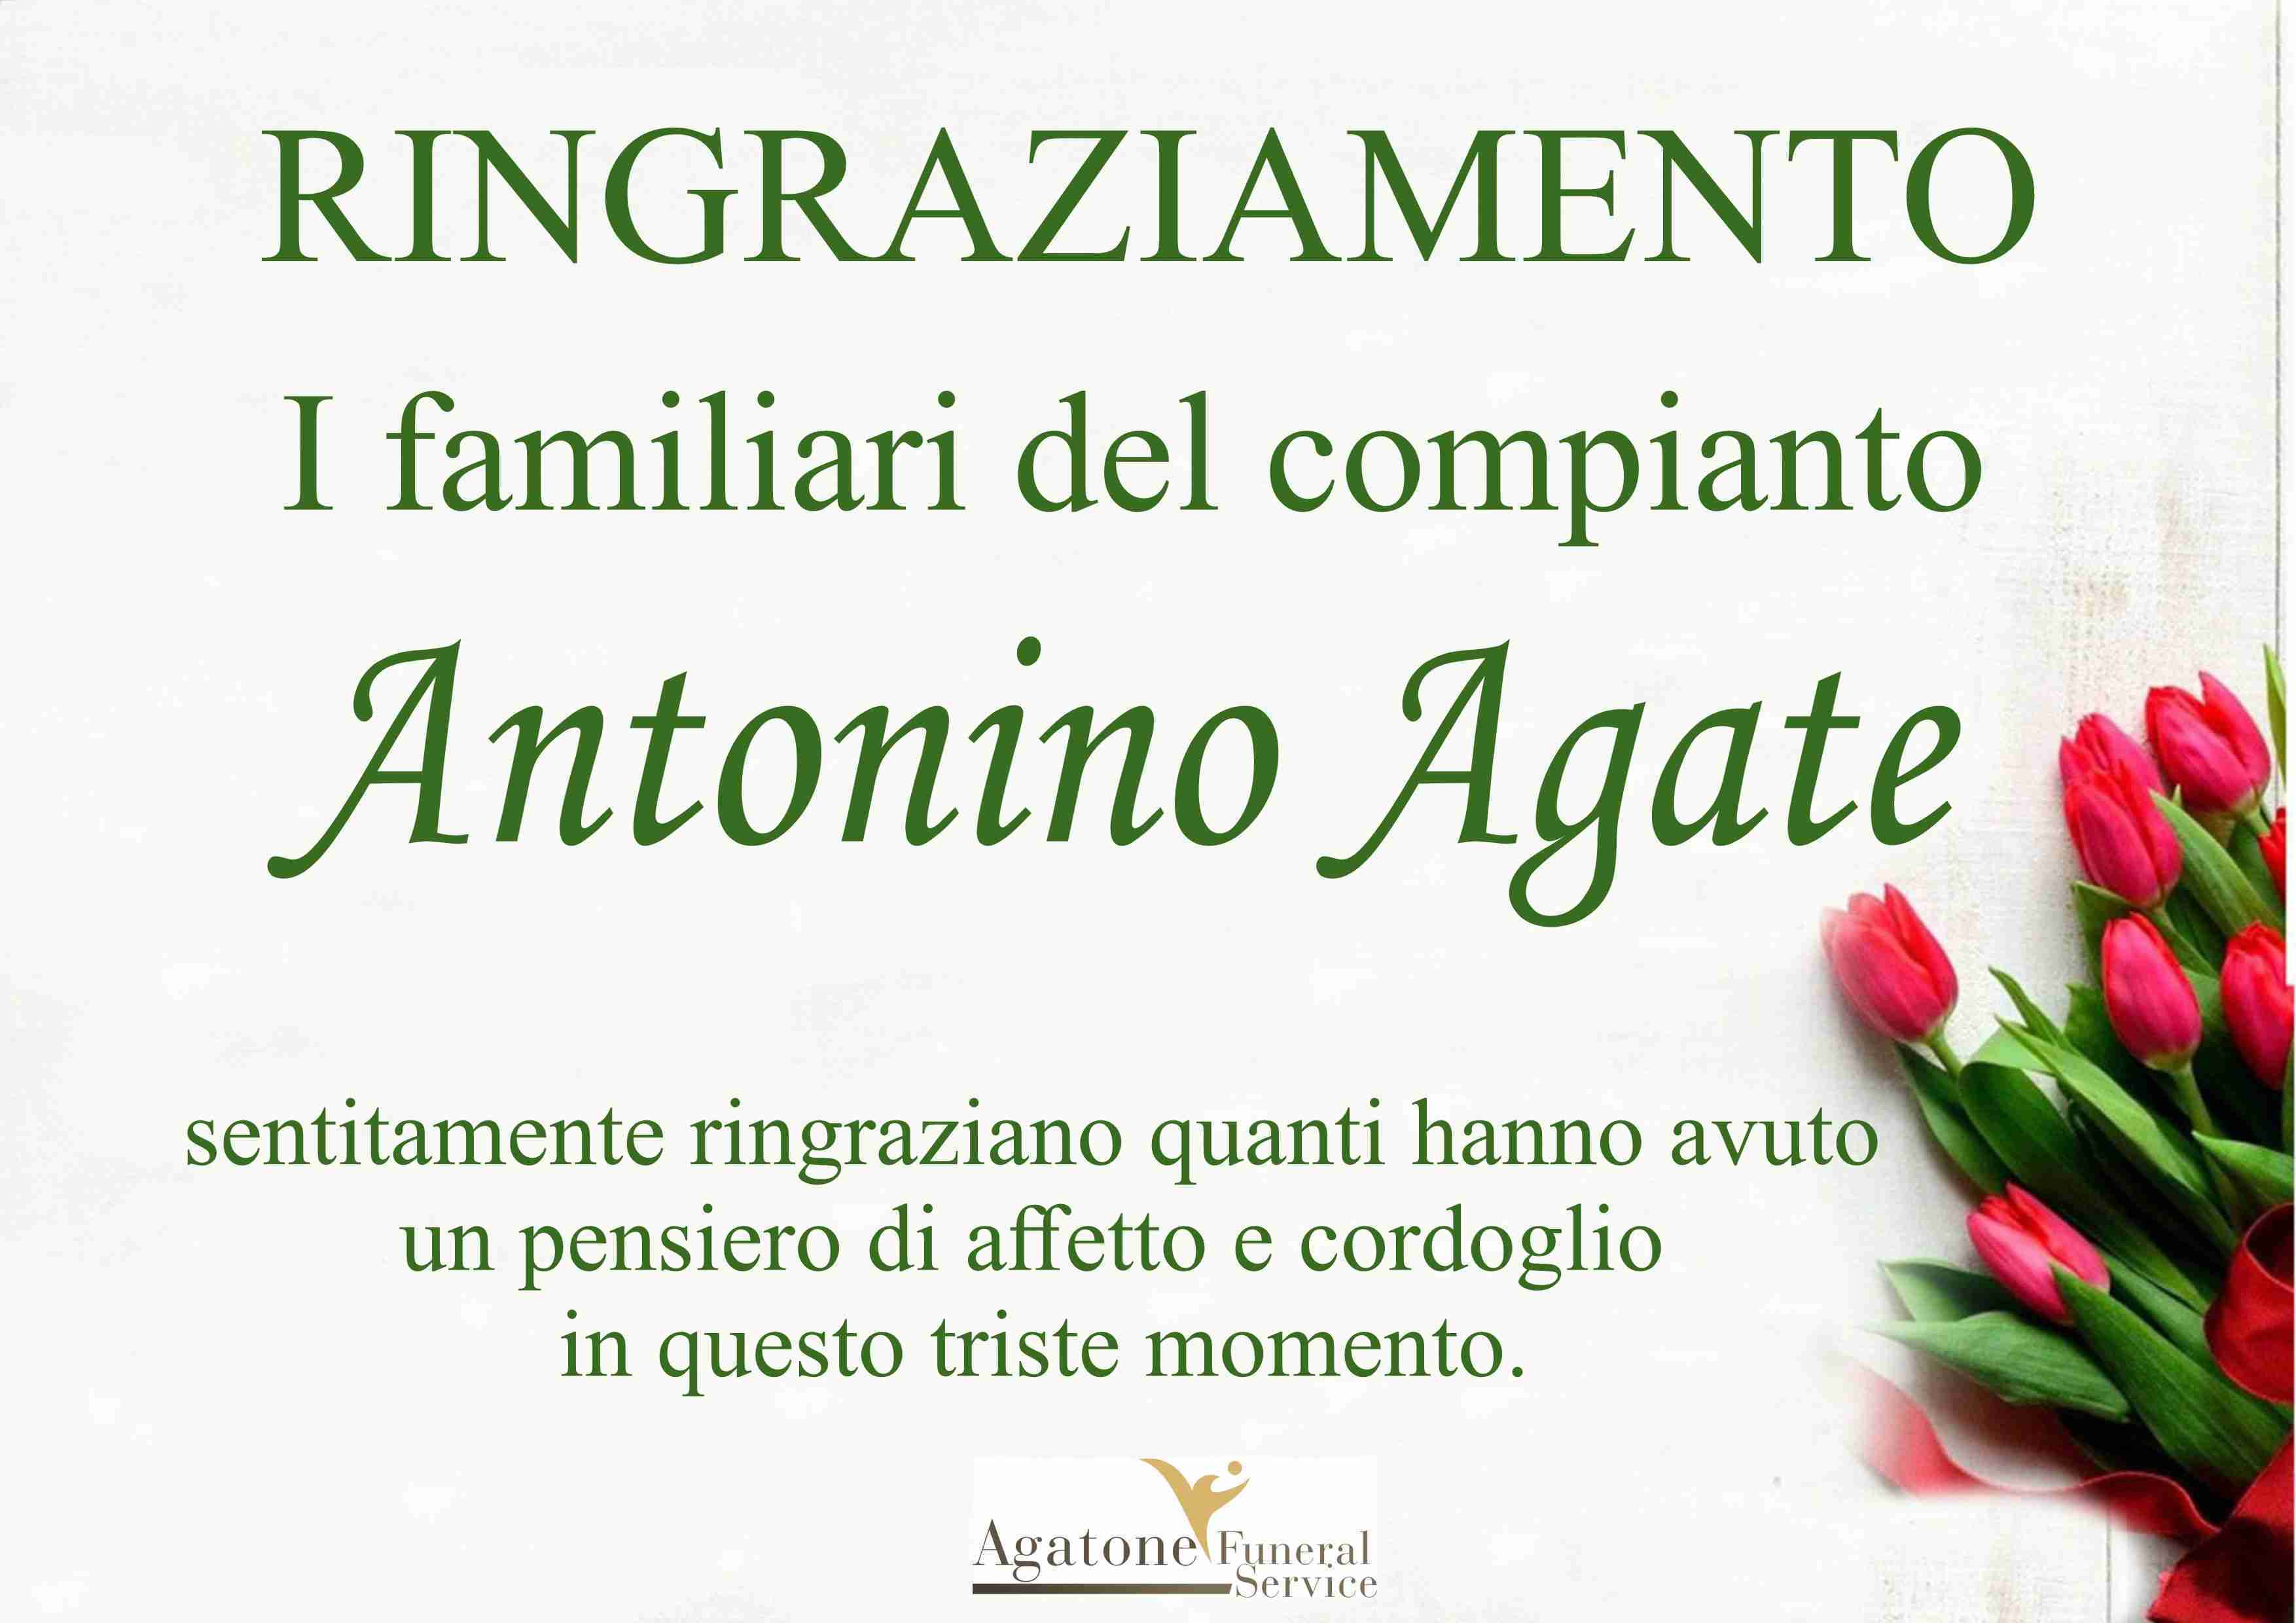 Antonino Agate